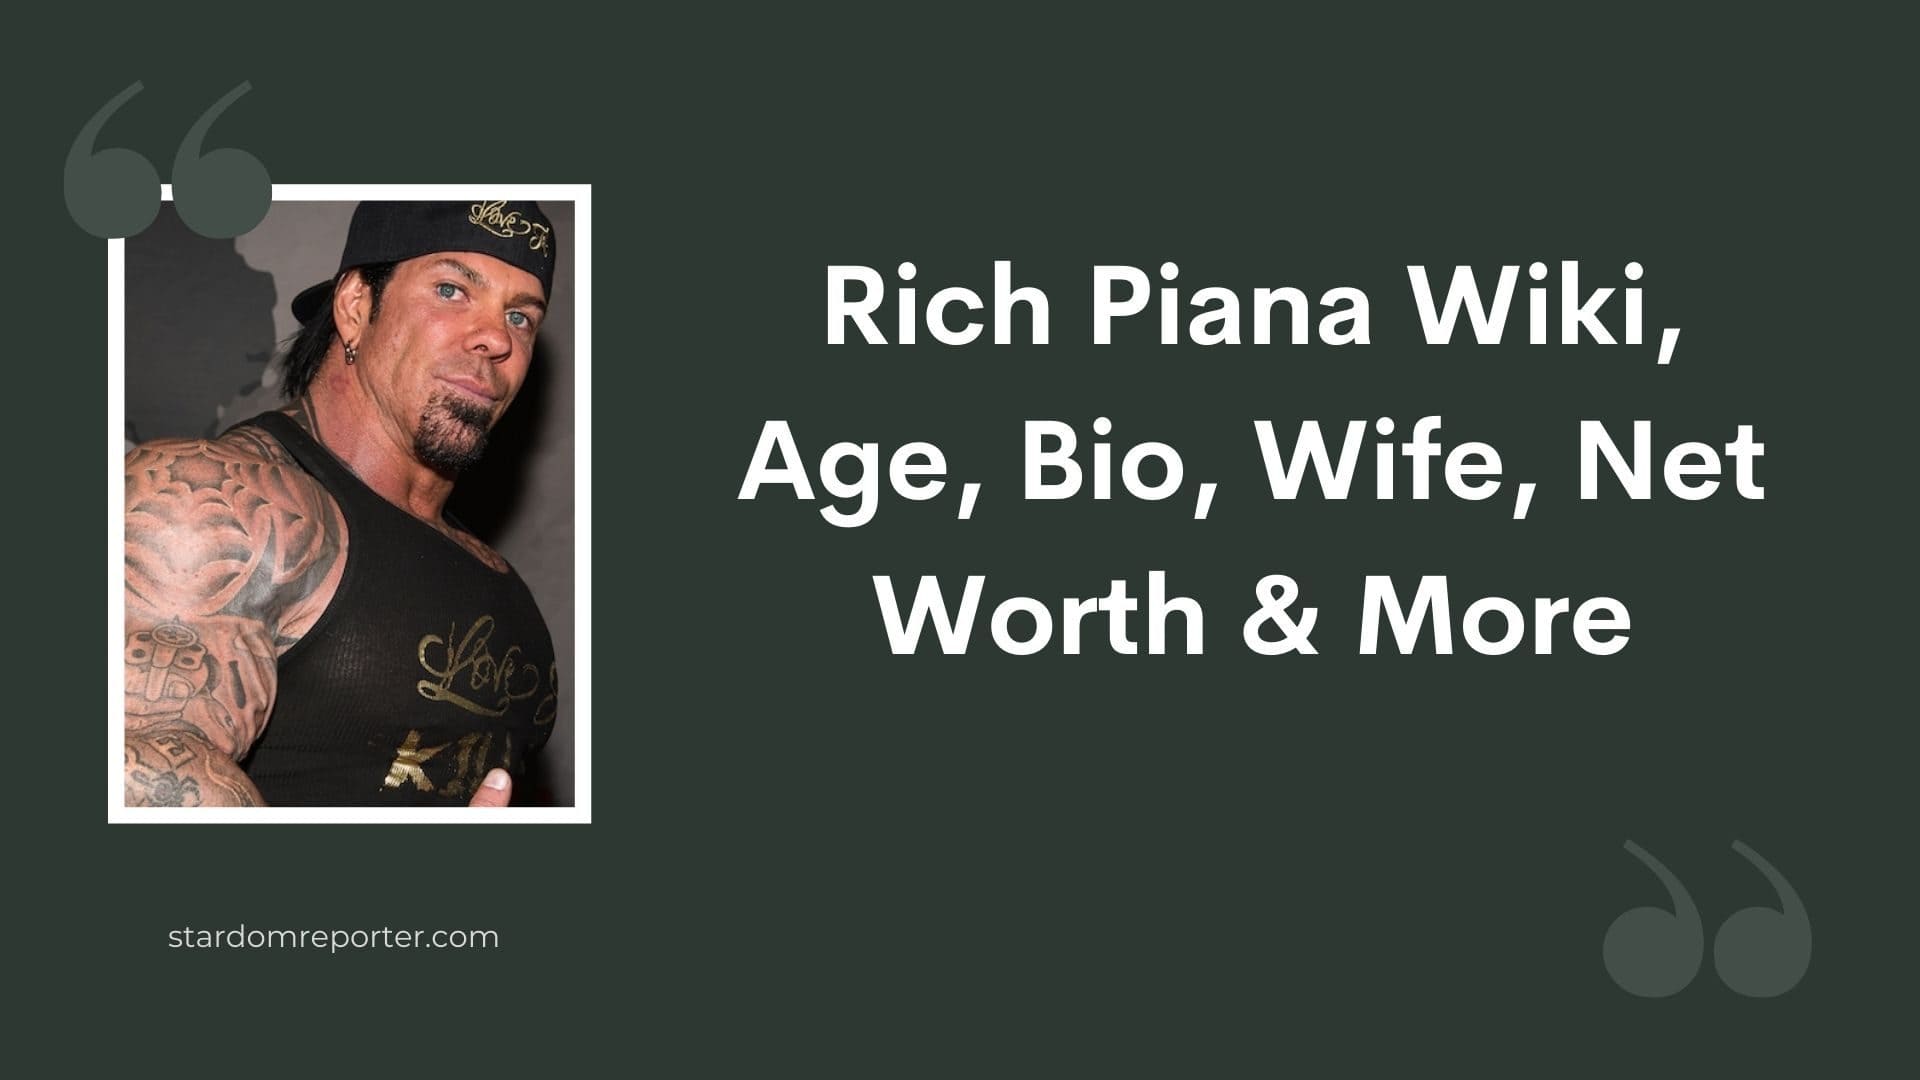 Rich Piana Wiki, Age, Bio, Wife, Net Worth & More - 51